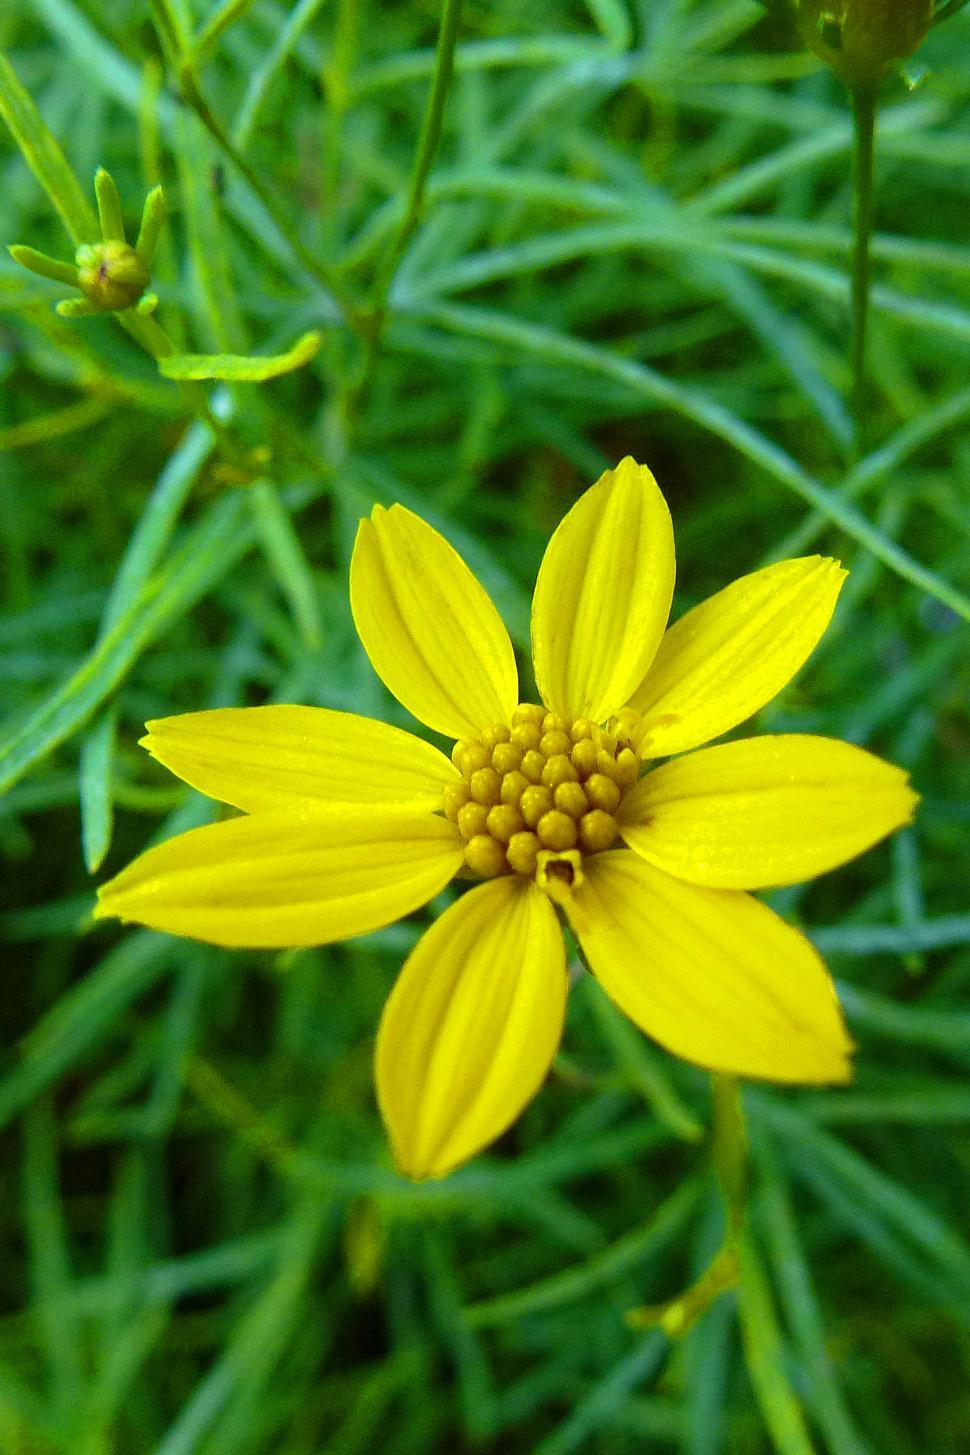 Free Image of Yellow Coreopsis Flower Closeup 